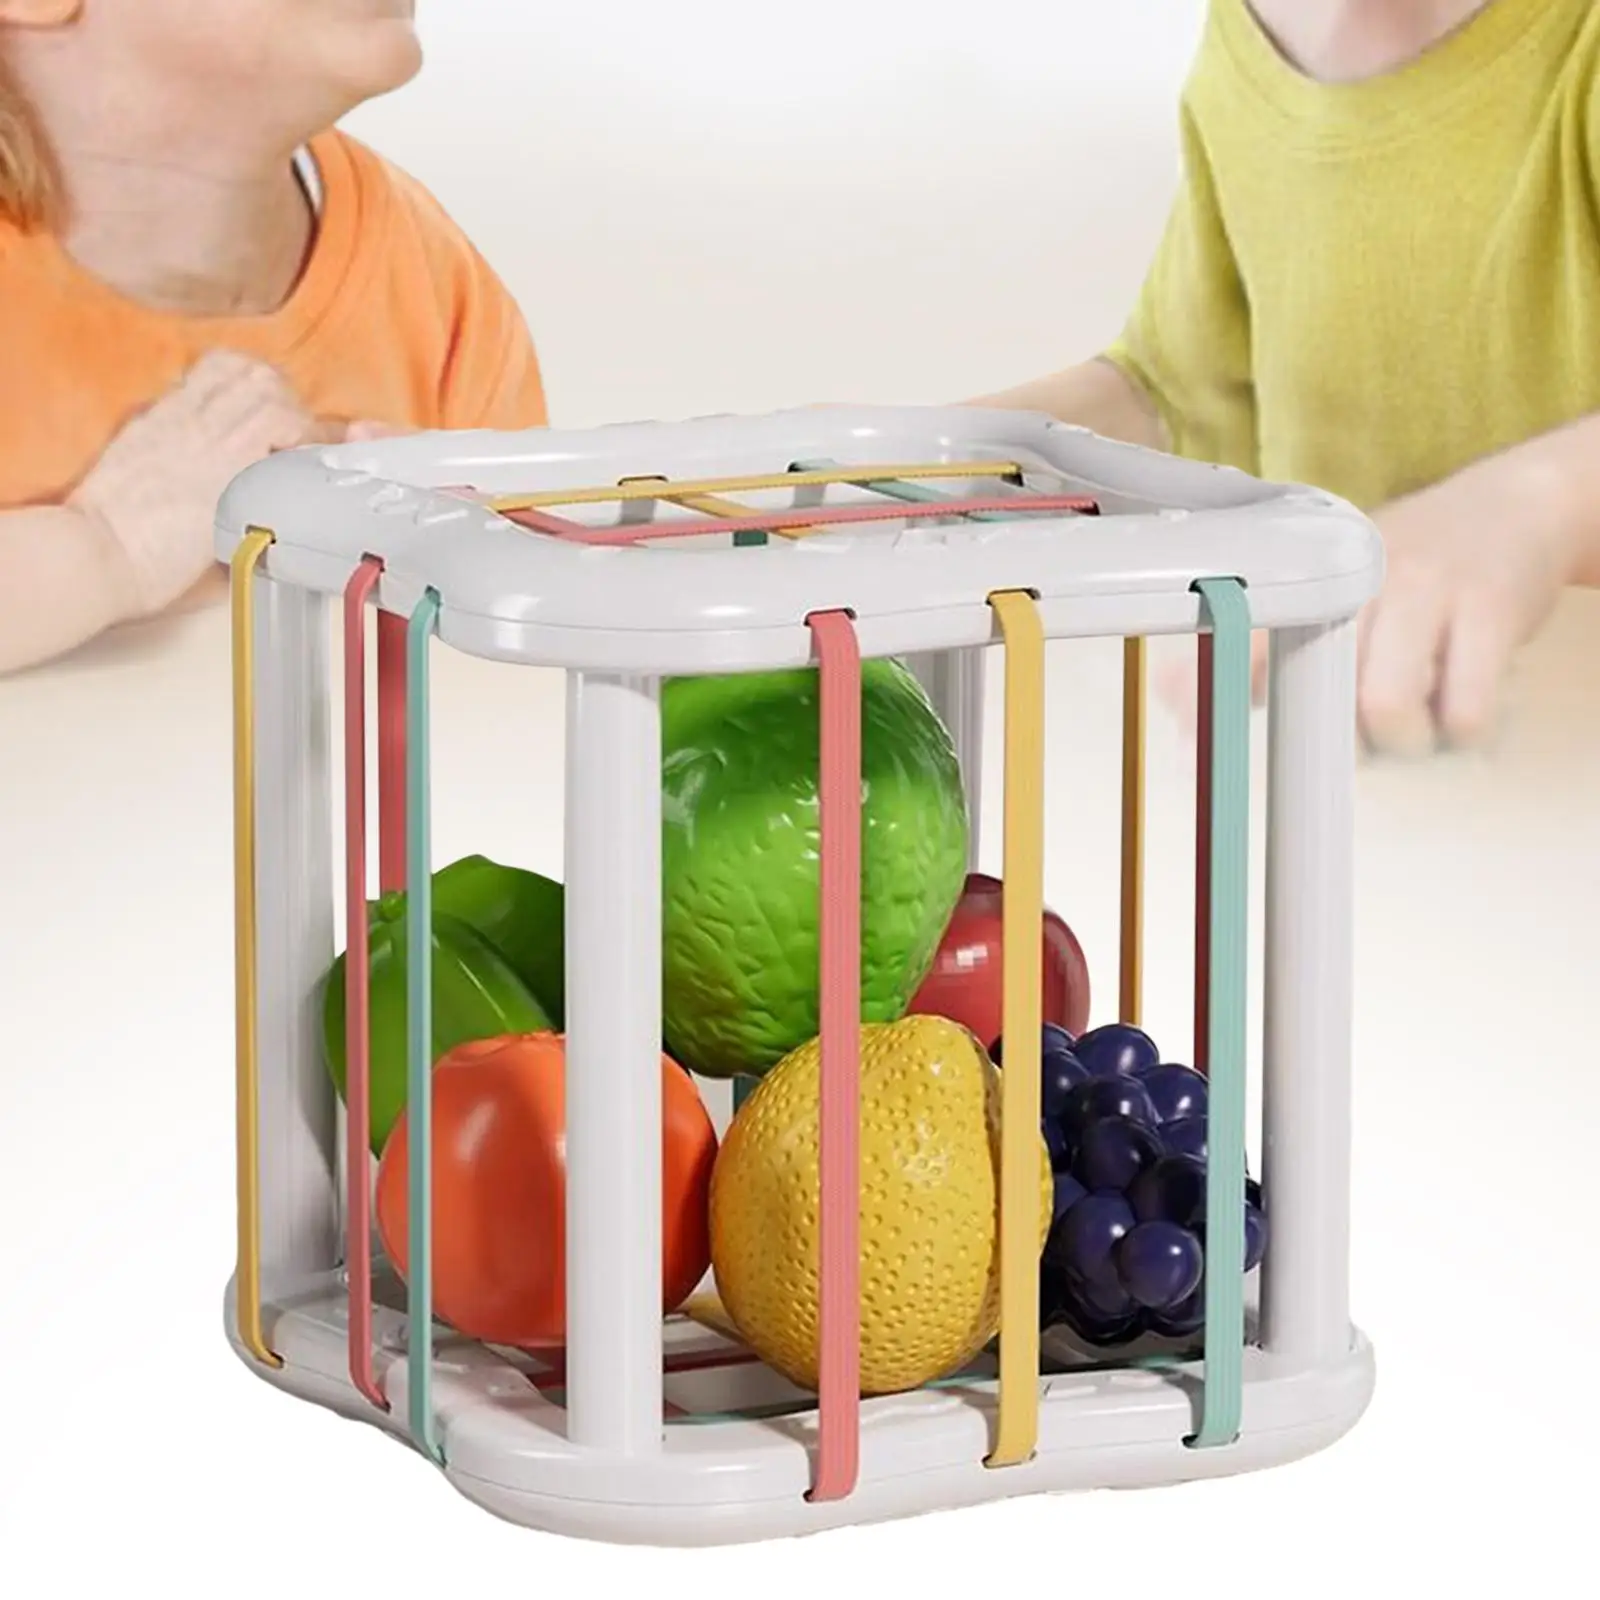 Sensory Bin Baby Toys Motor Skills Kitchen Fruits Toys Sensory Sorting Toys for Girls Boys Age 1 2 3 Children Gifts